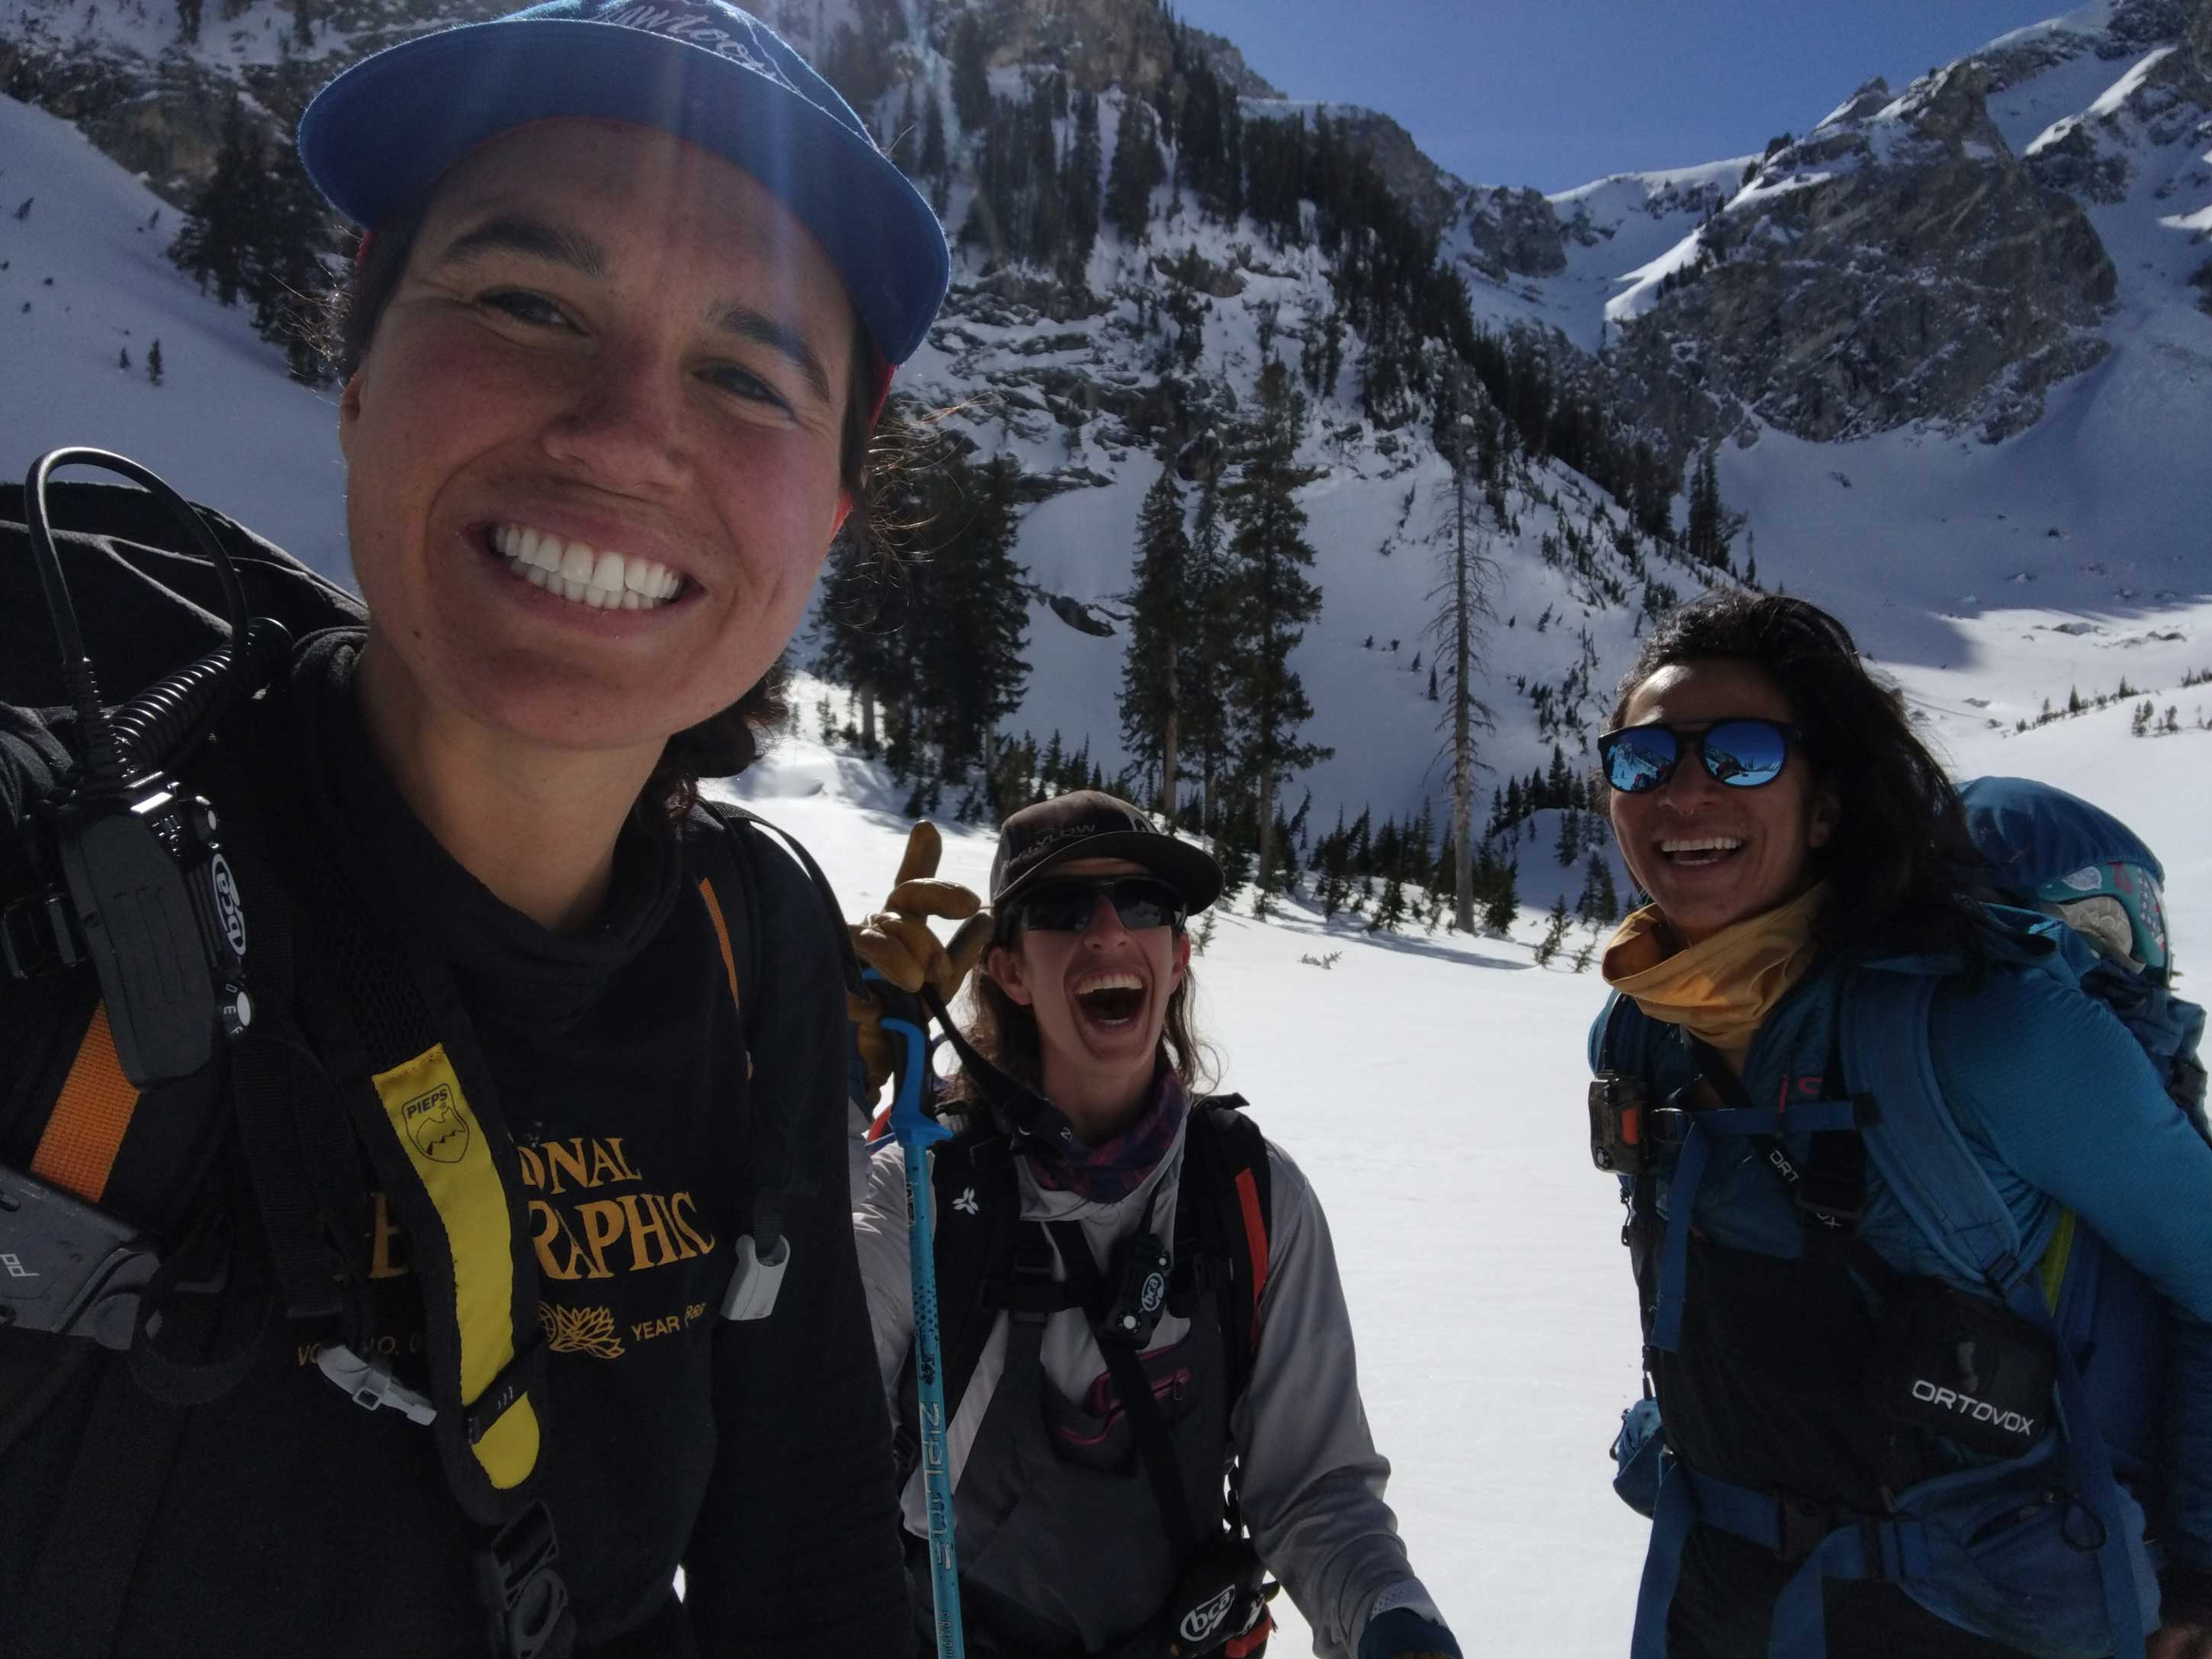 Sofia Jaramillo-Sophia Schwartz and Dani Reyes-Acosta gleefully pose after skiing an expert couloir in Grand Teton National Park